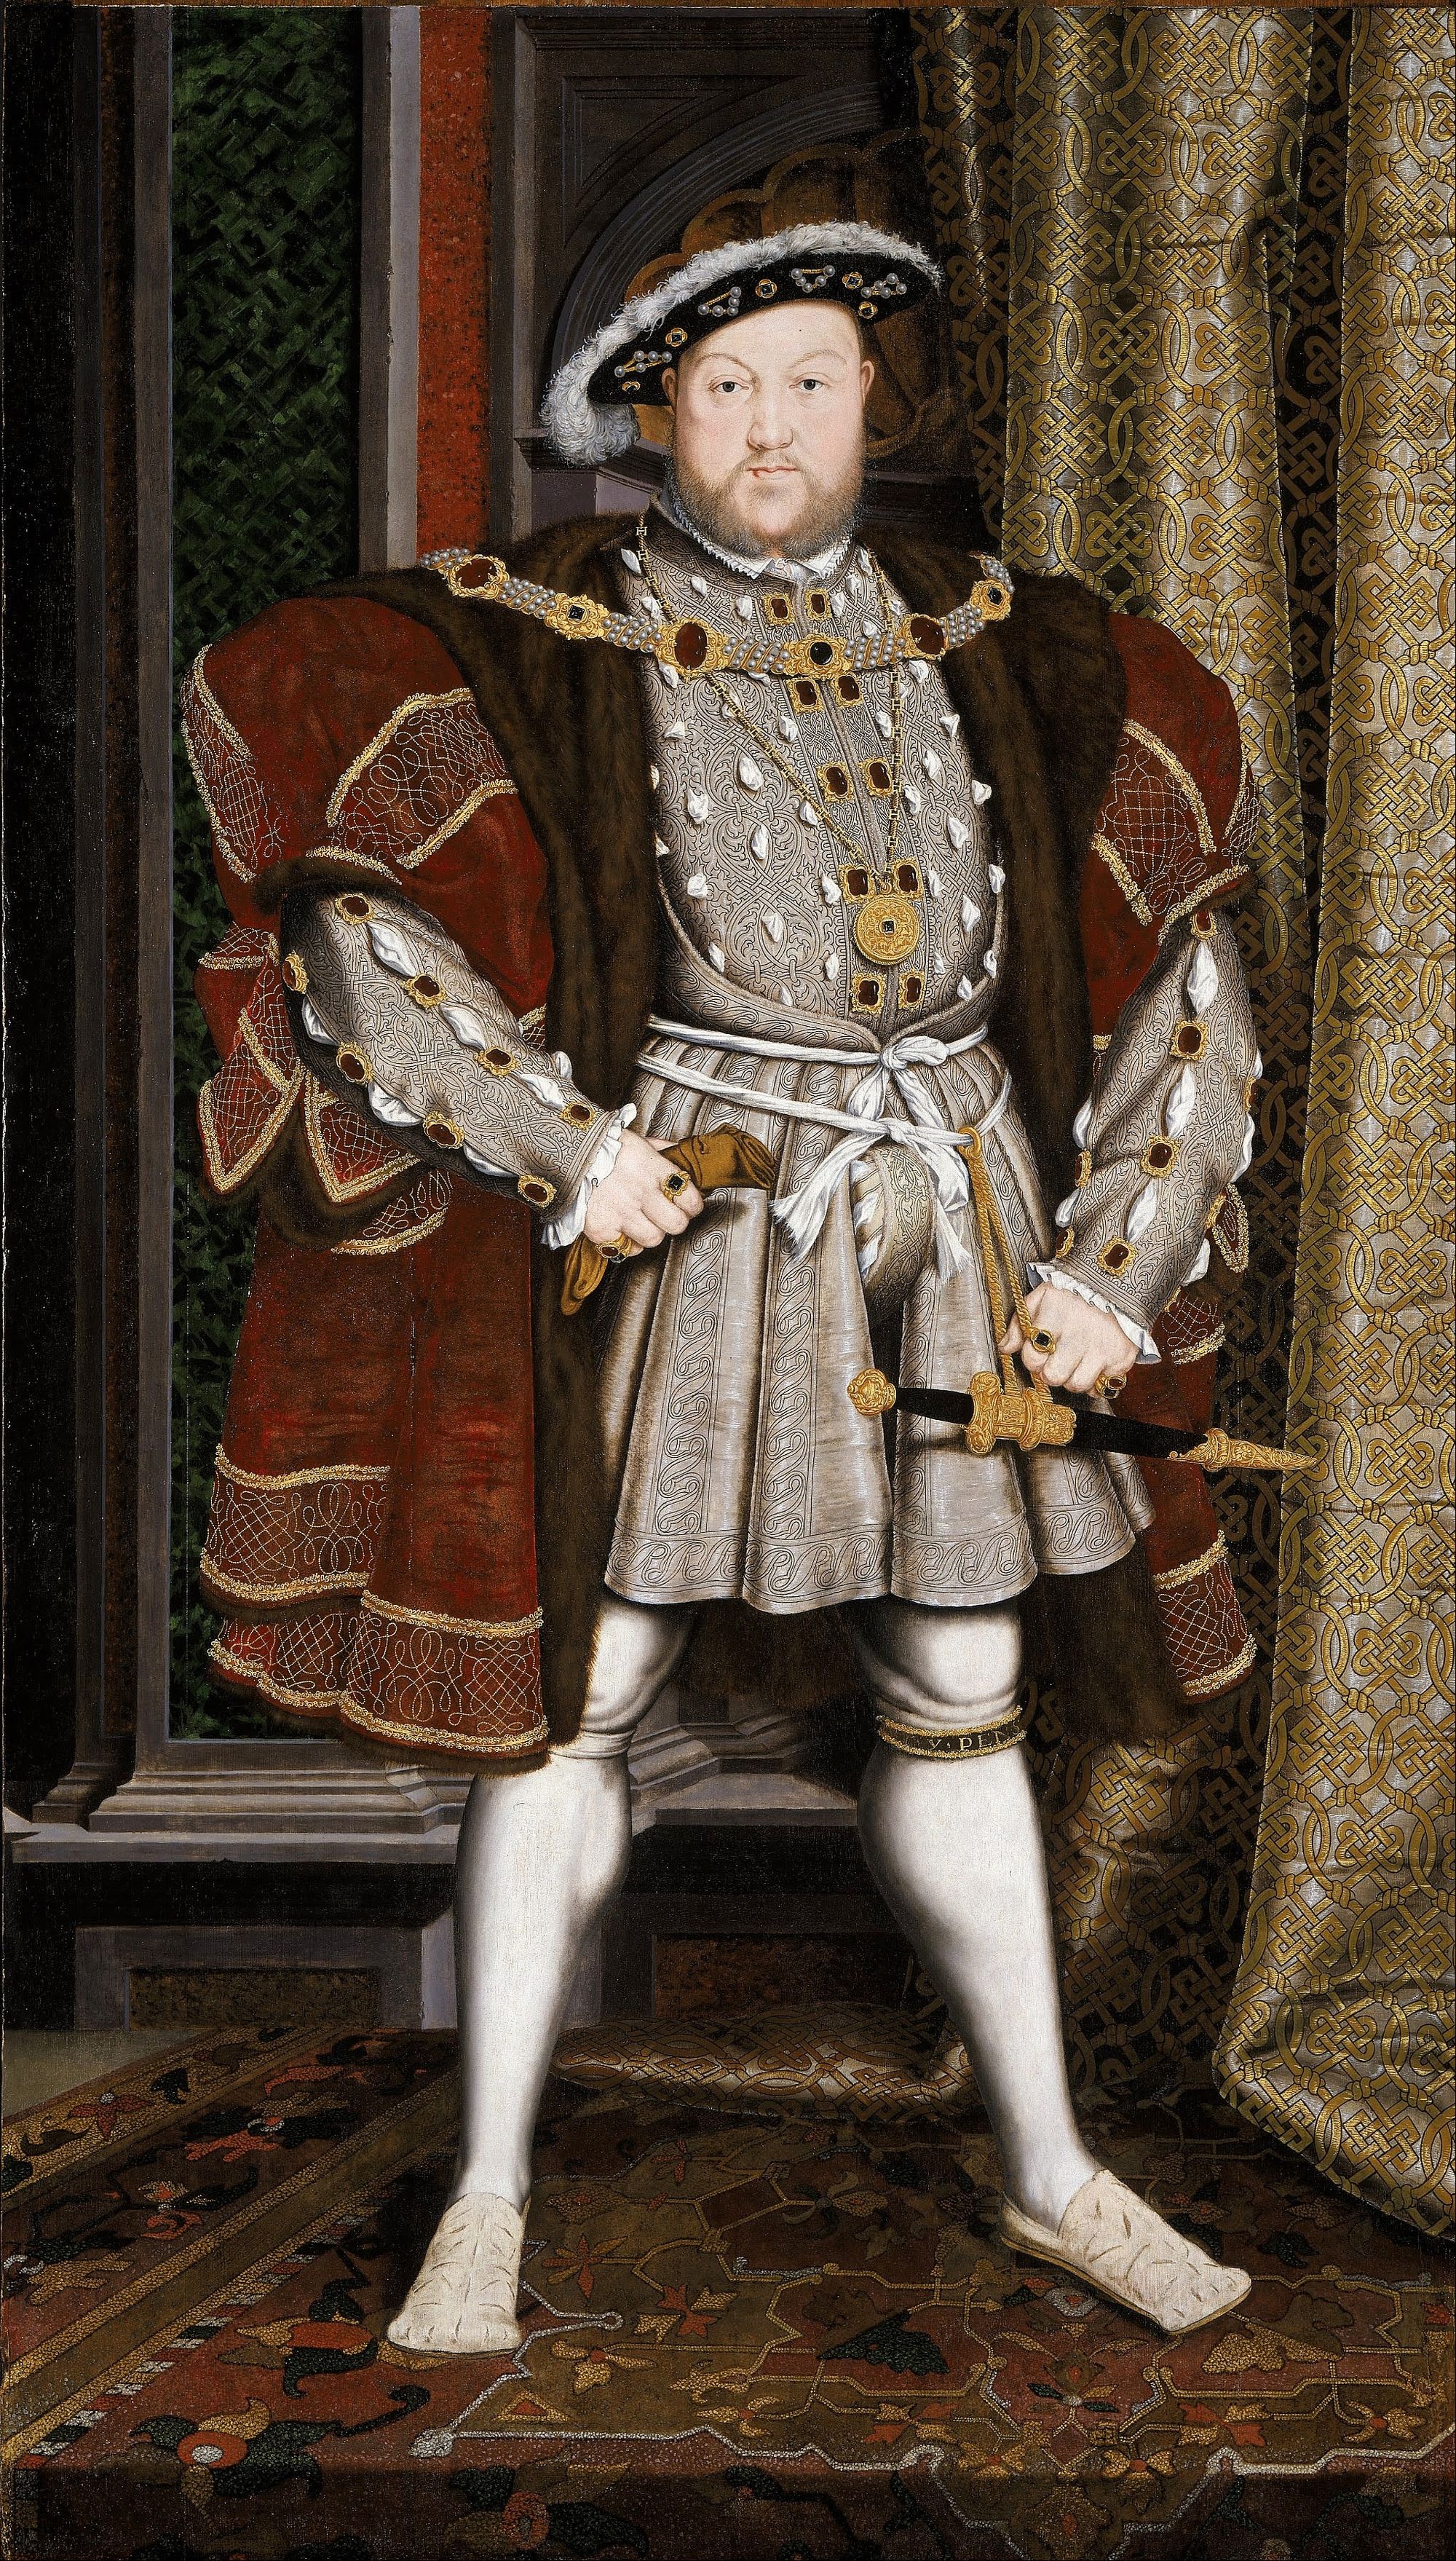 Portrain of Henry VIII